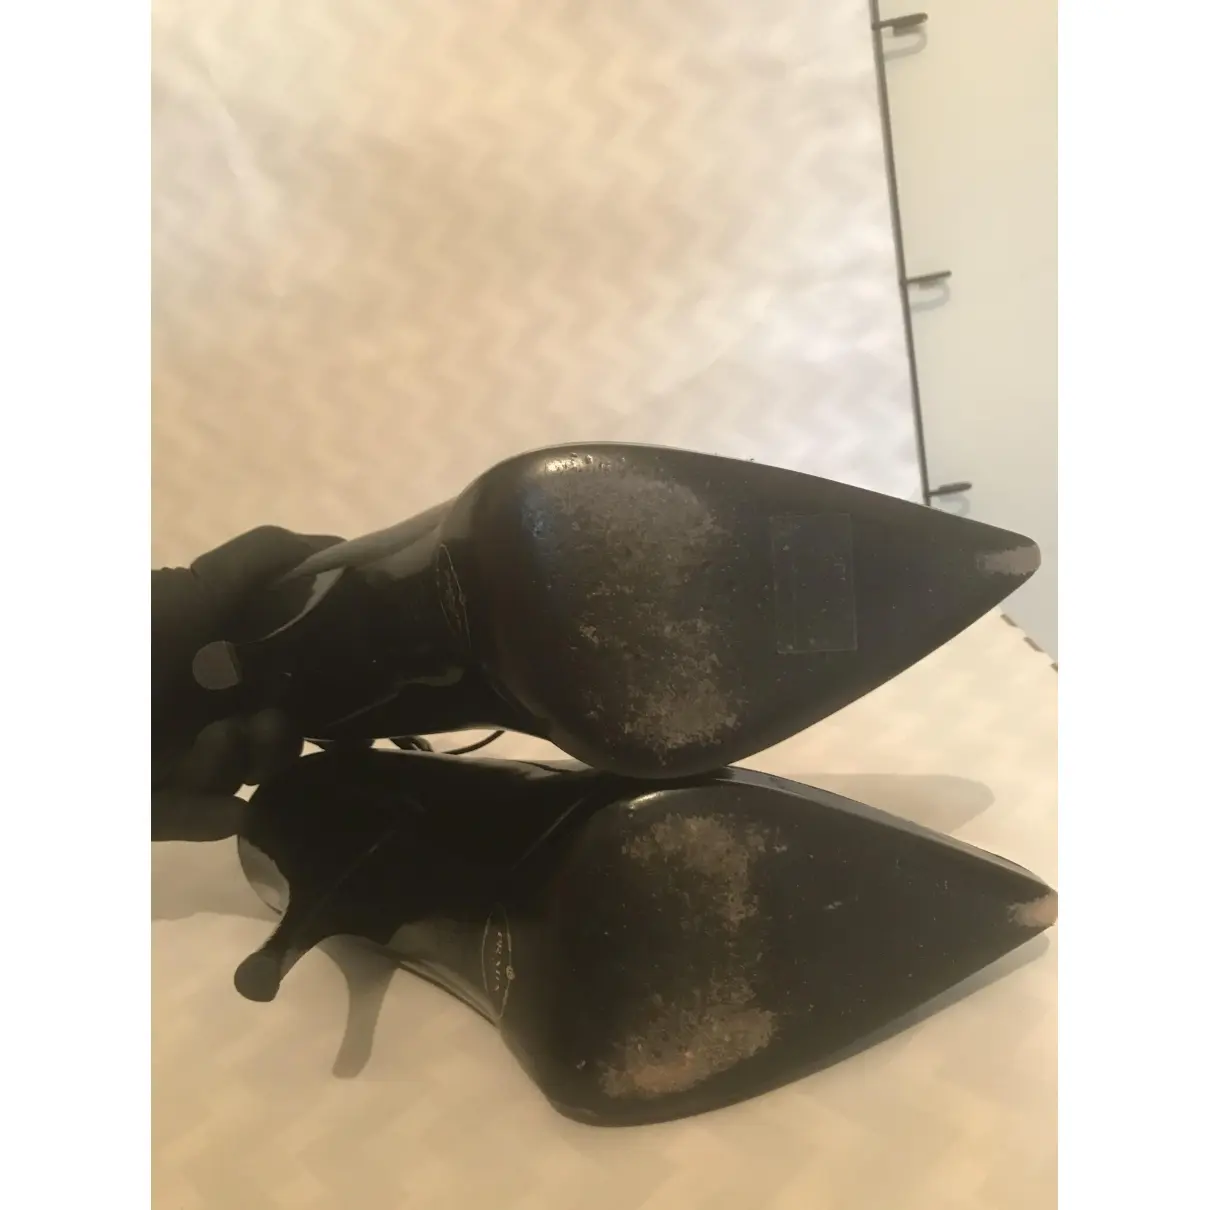 Leather heels Prada